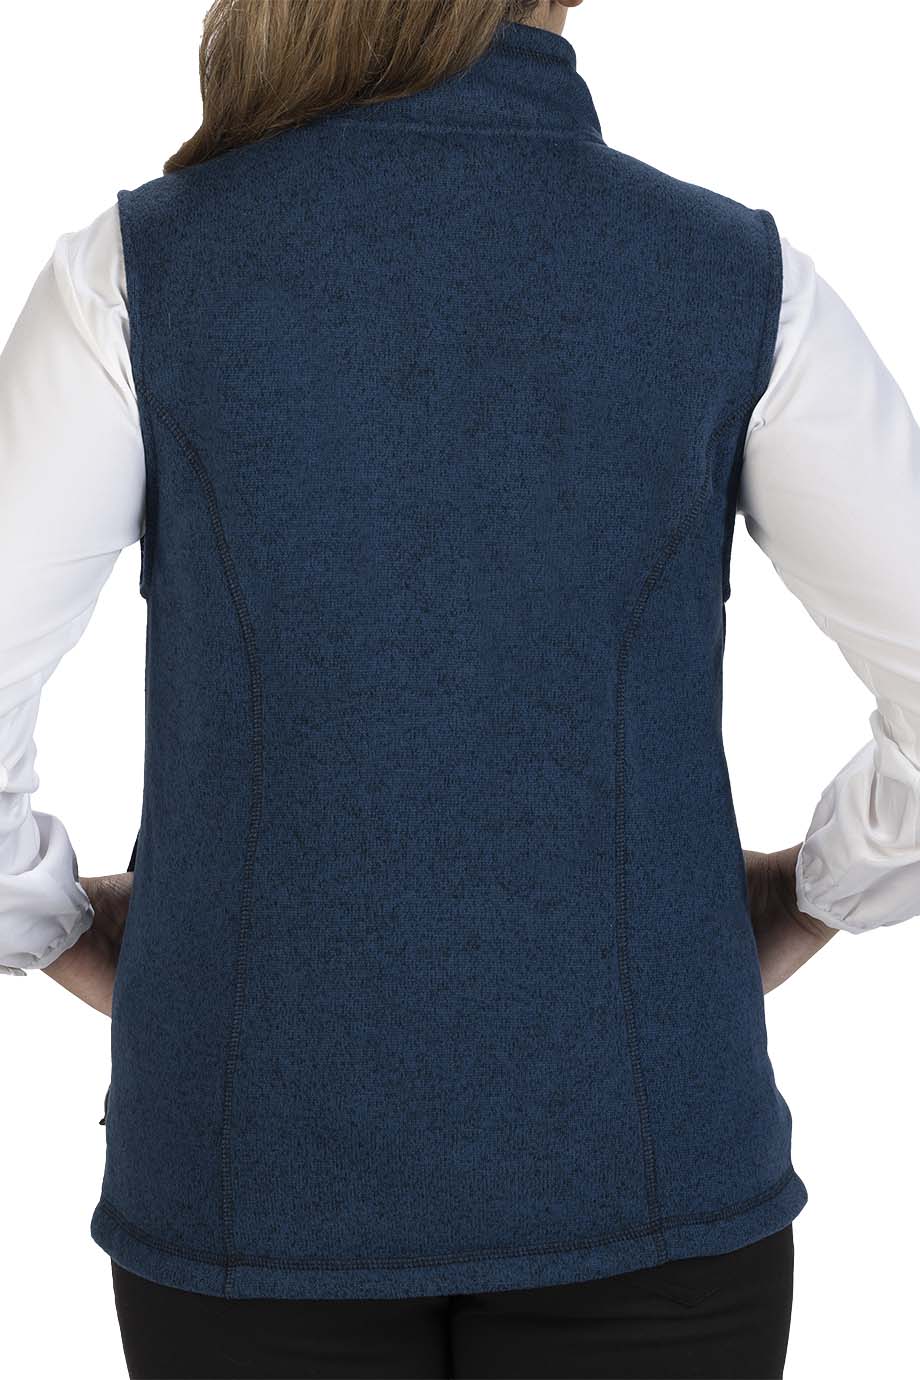 Edwards 6463 Women's Sweater Knit Fleece Vest Navy Back